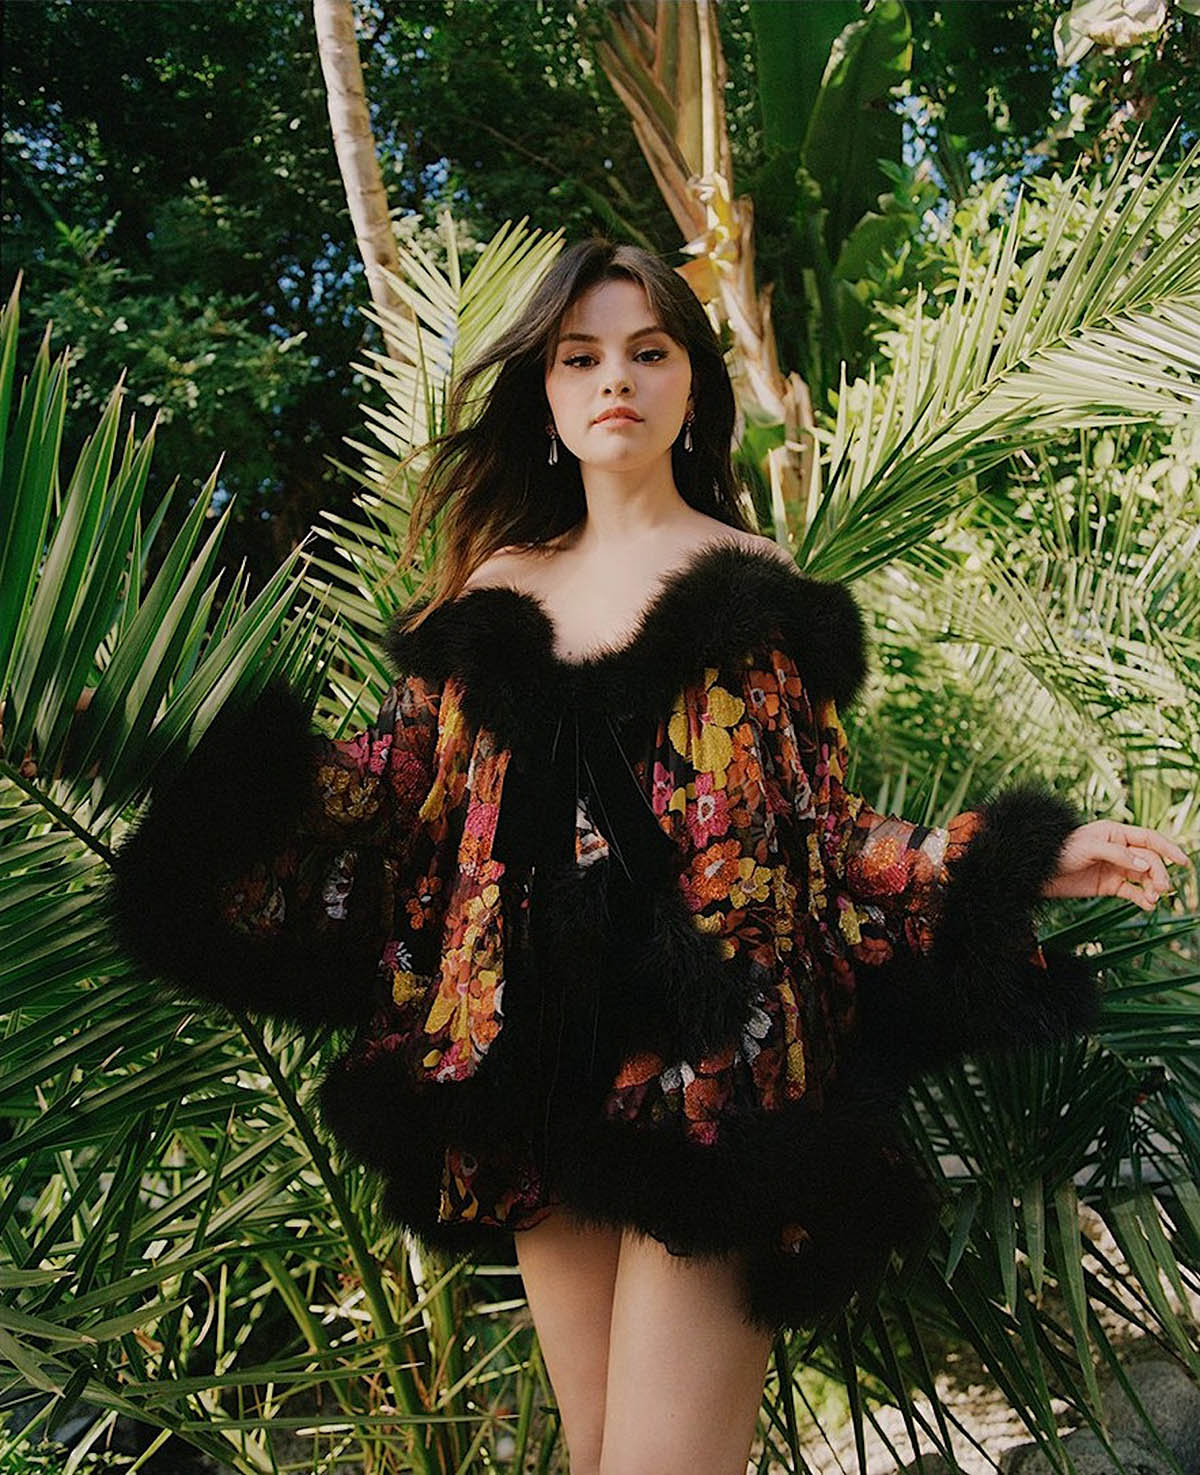 Selena Gomez covers Vogue US April 2021 by Nadine Ijewere